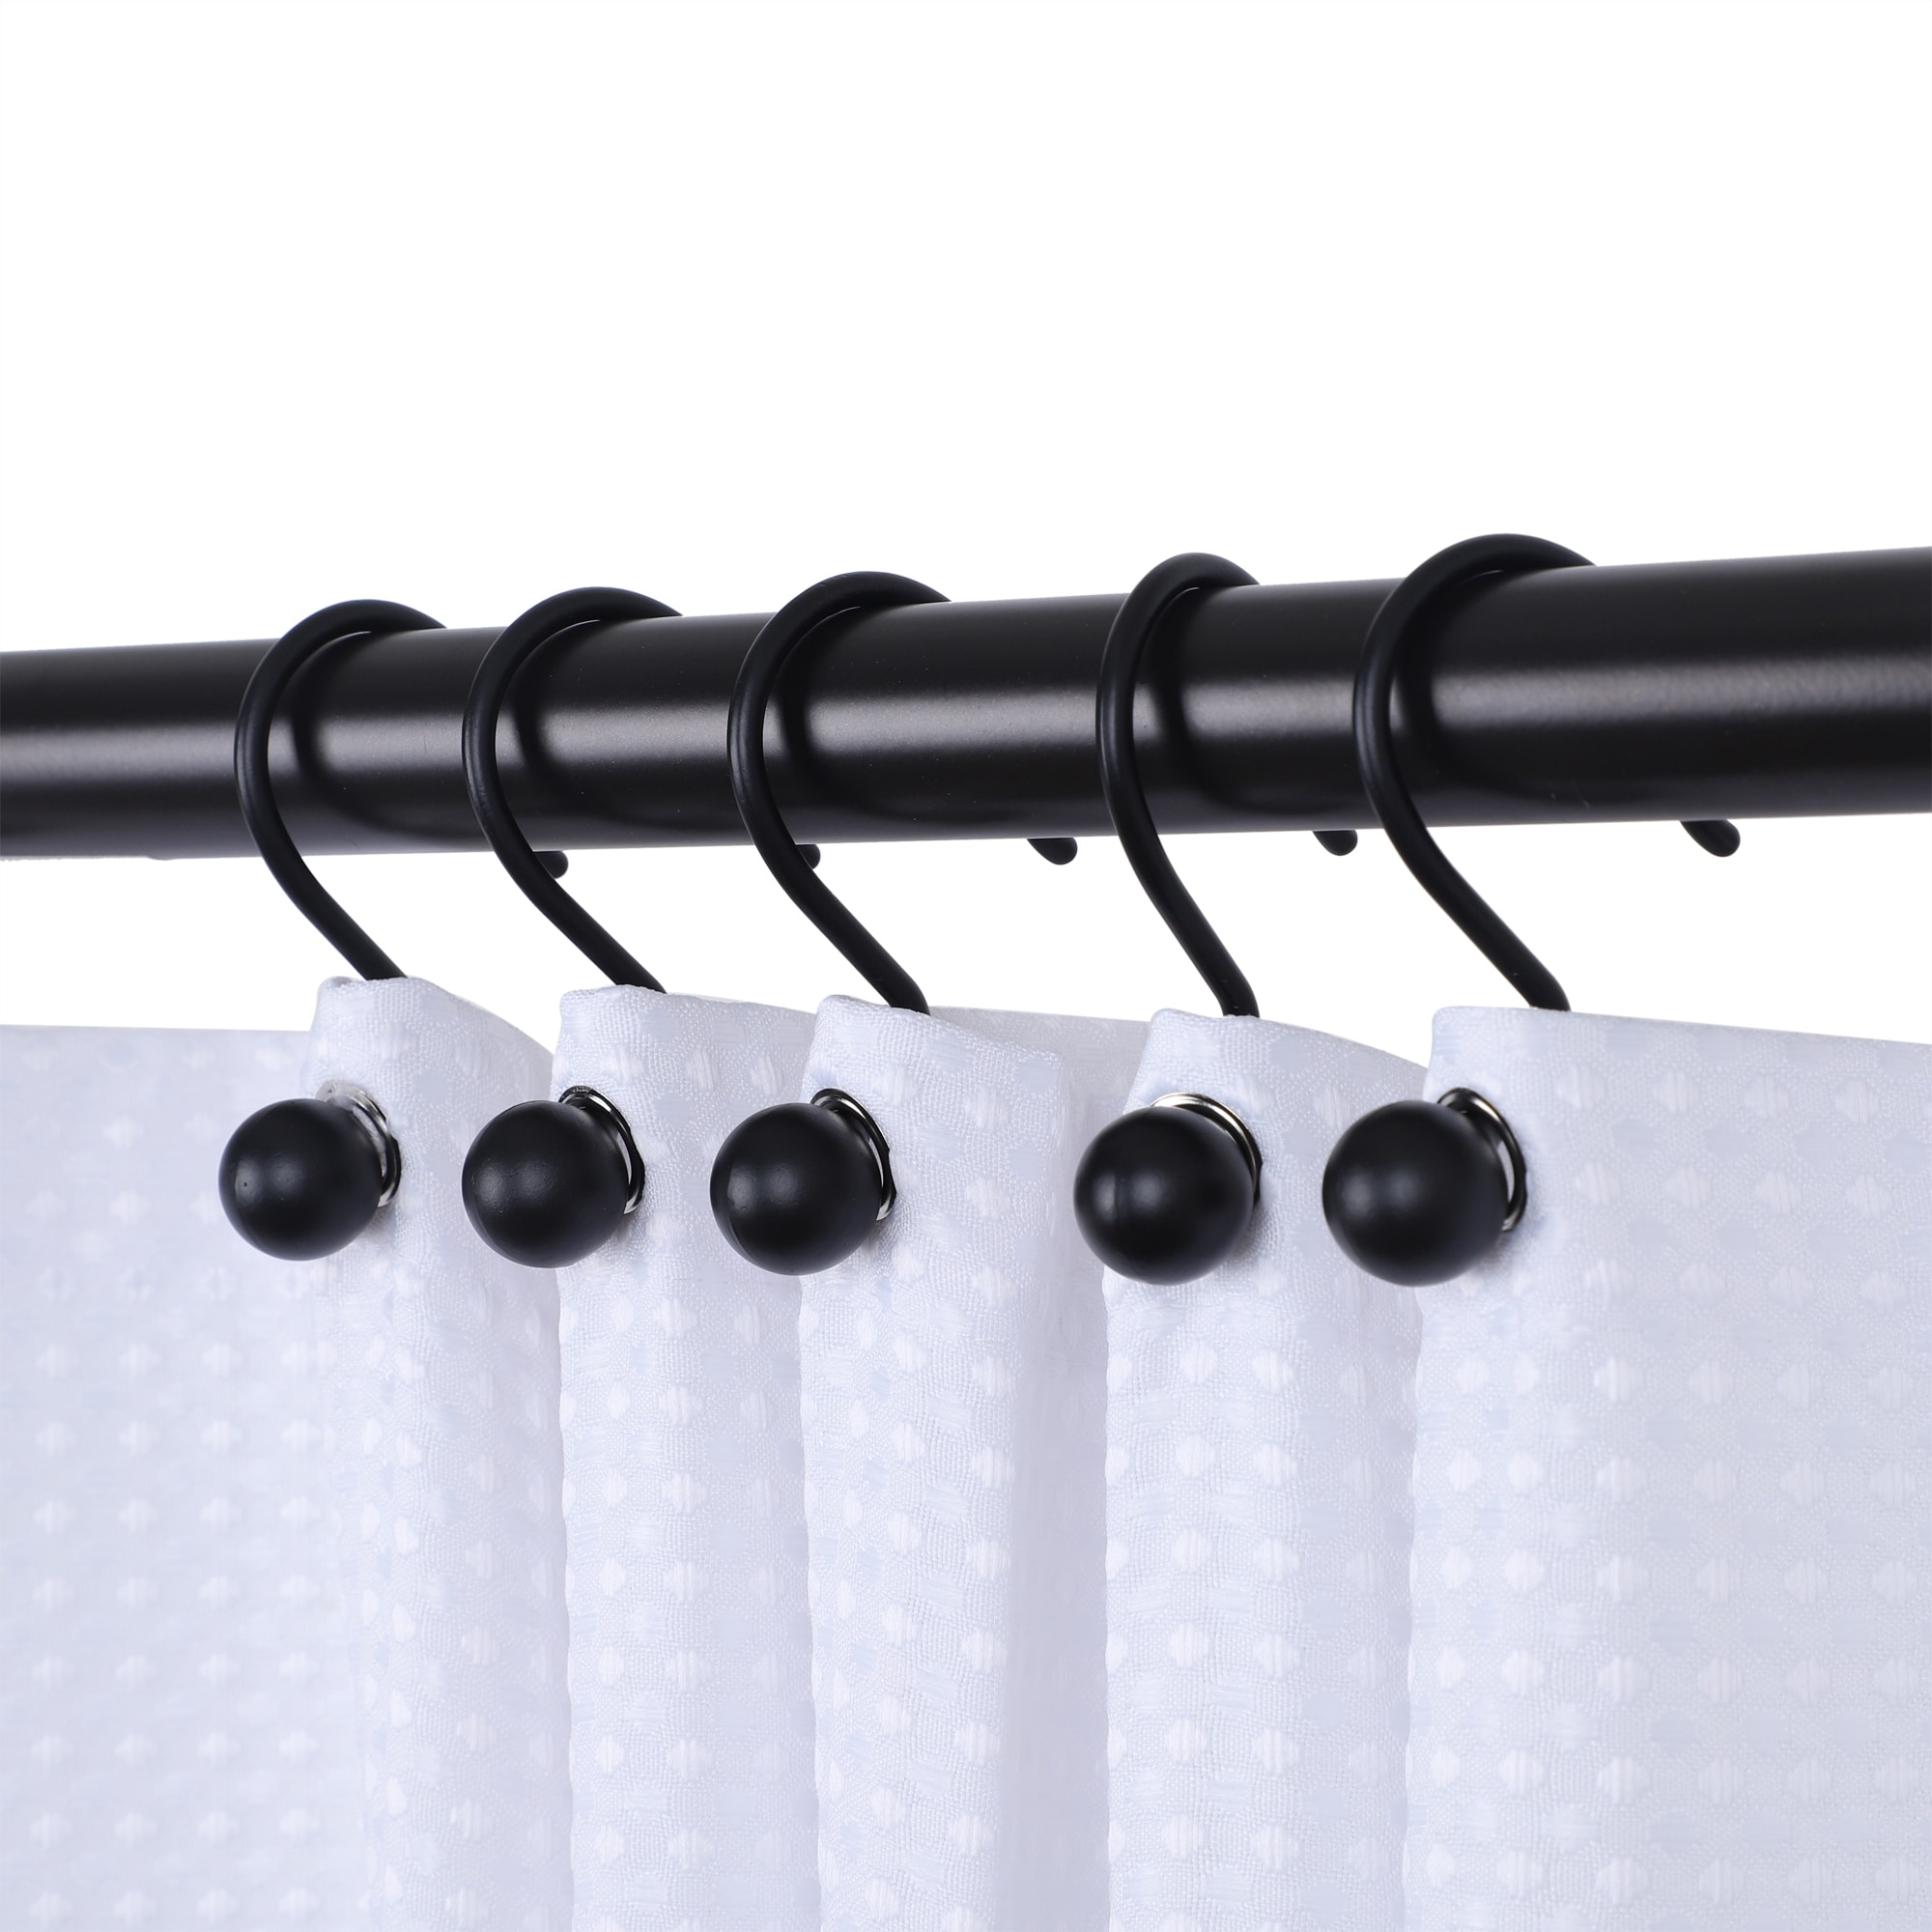 BATHROOM SET 12 Contemporary Shower Curtain Ball Hooks Offer £4.99 